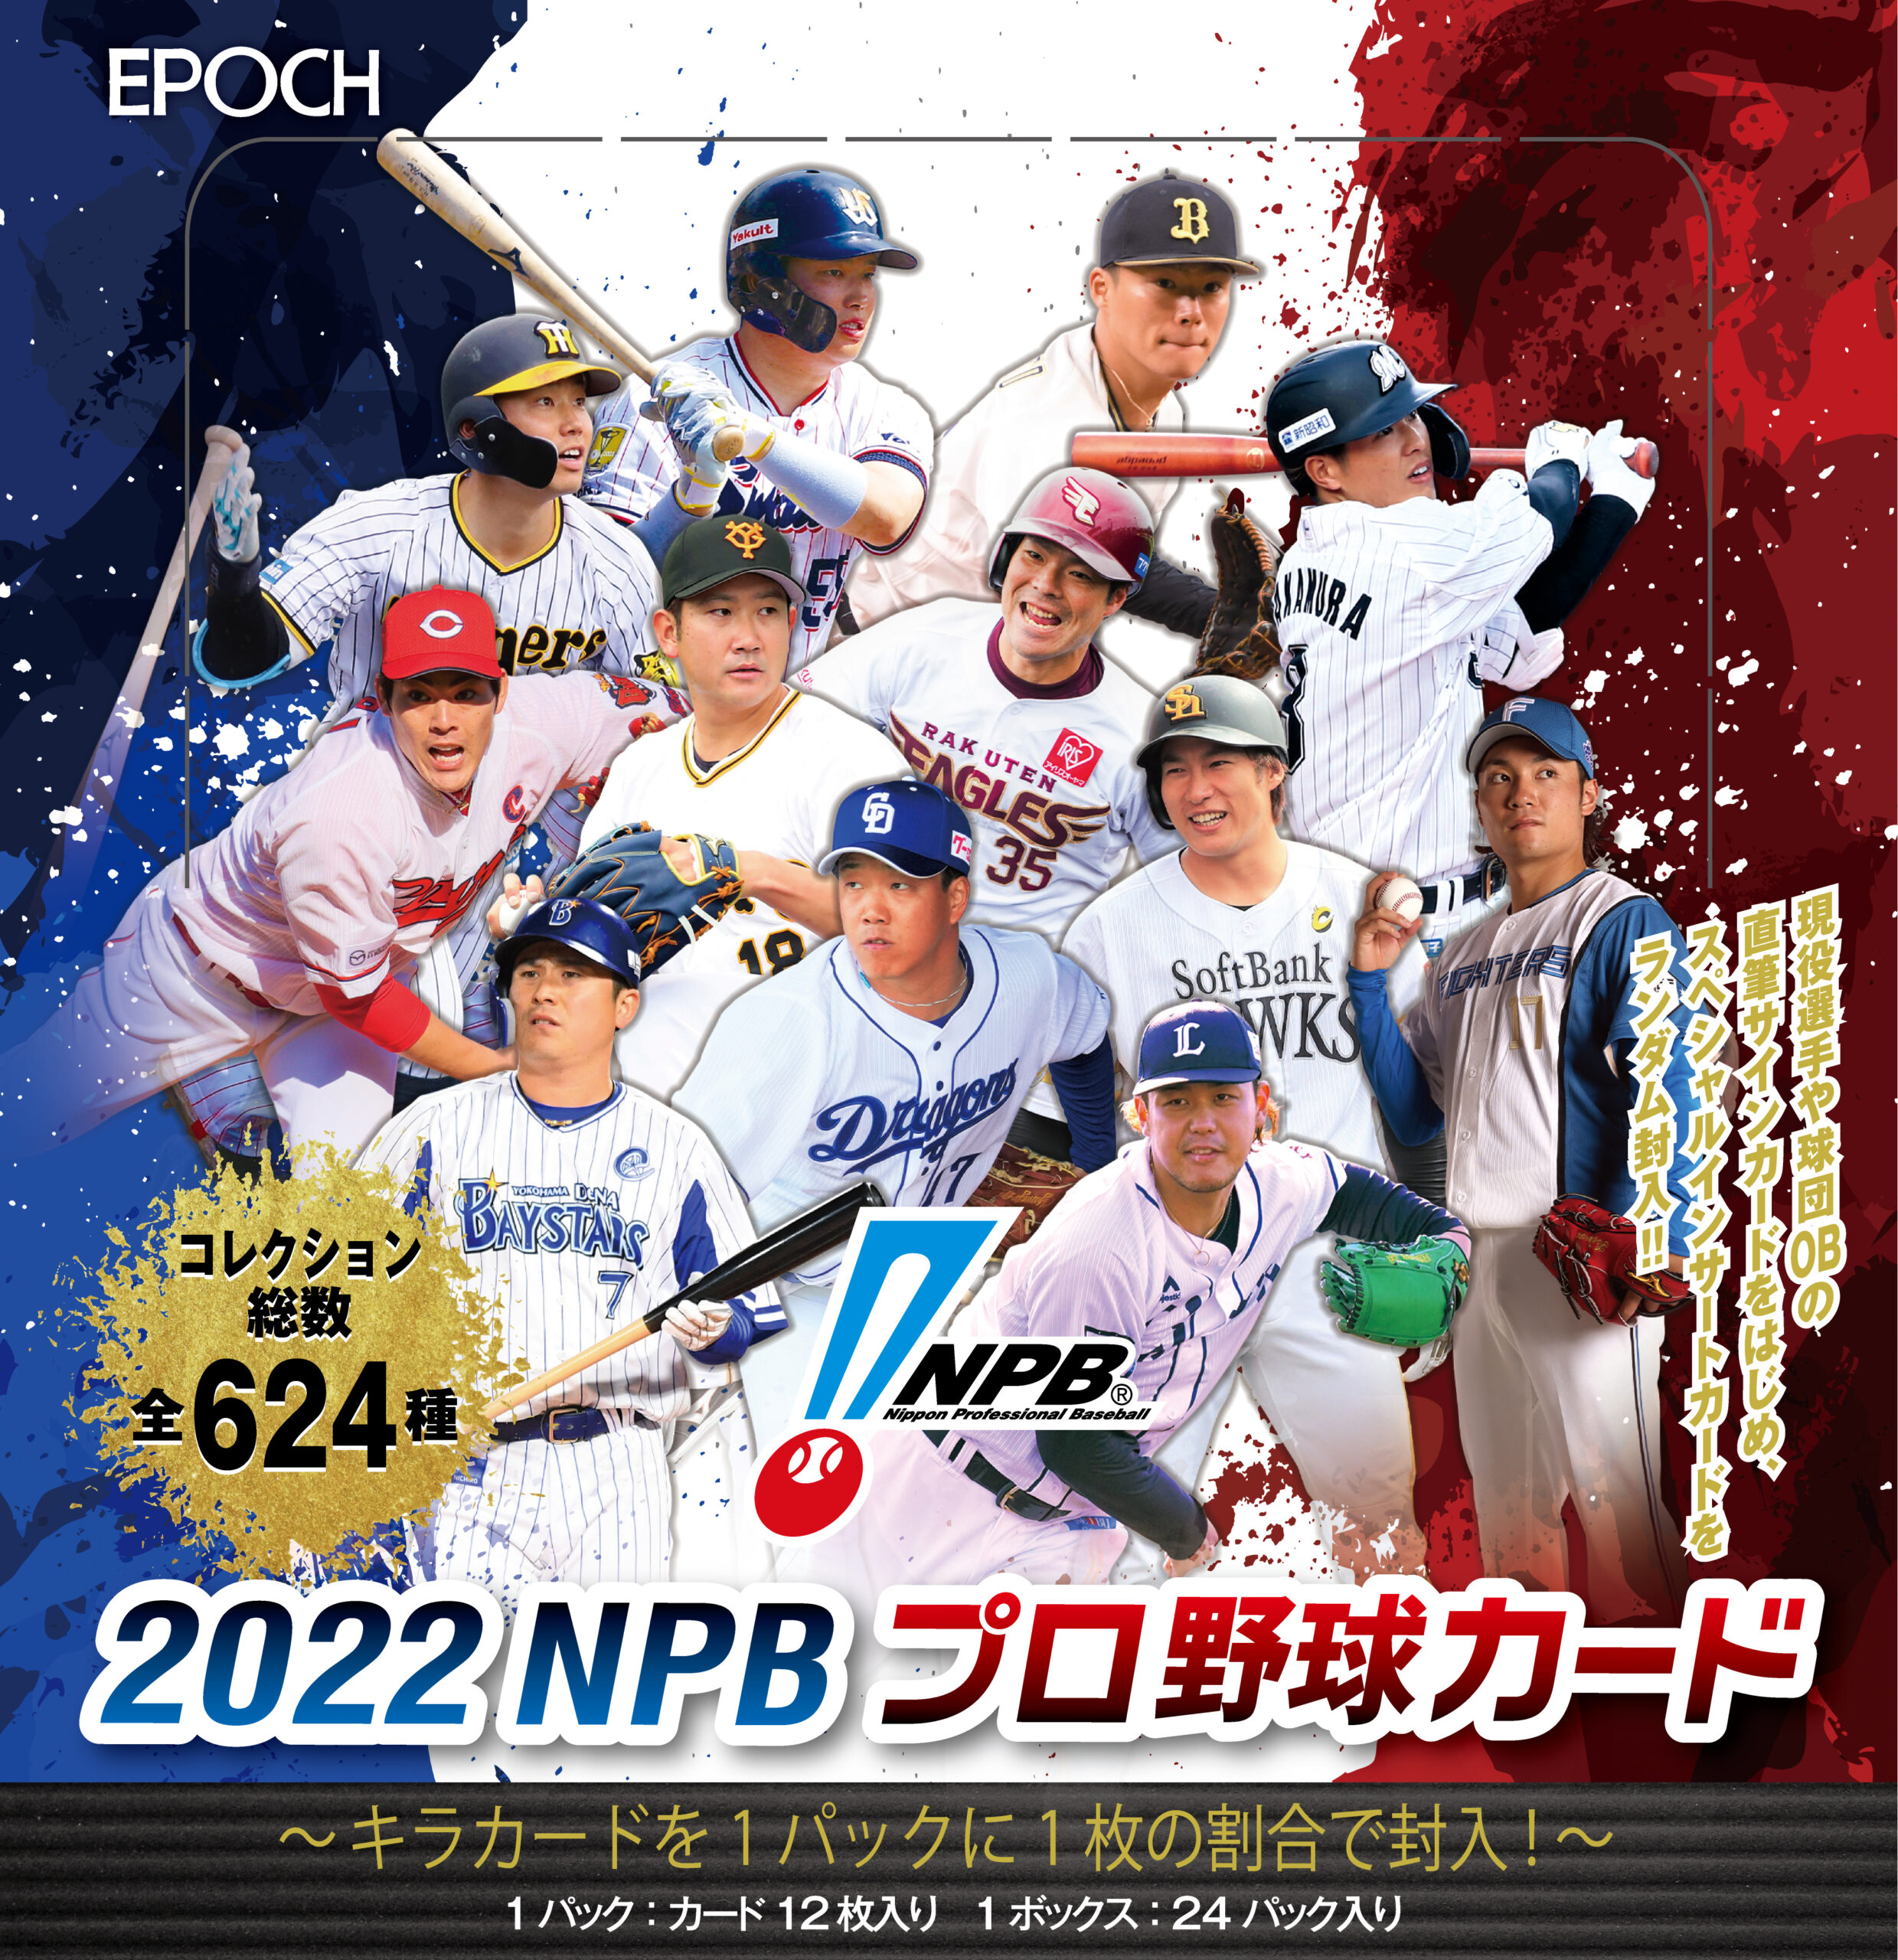 ⚾ EPOCH 2022 NPB プロ野球カード【製品情報】 | Trading Card Journal